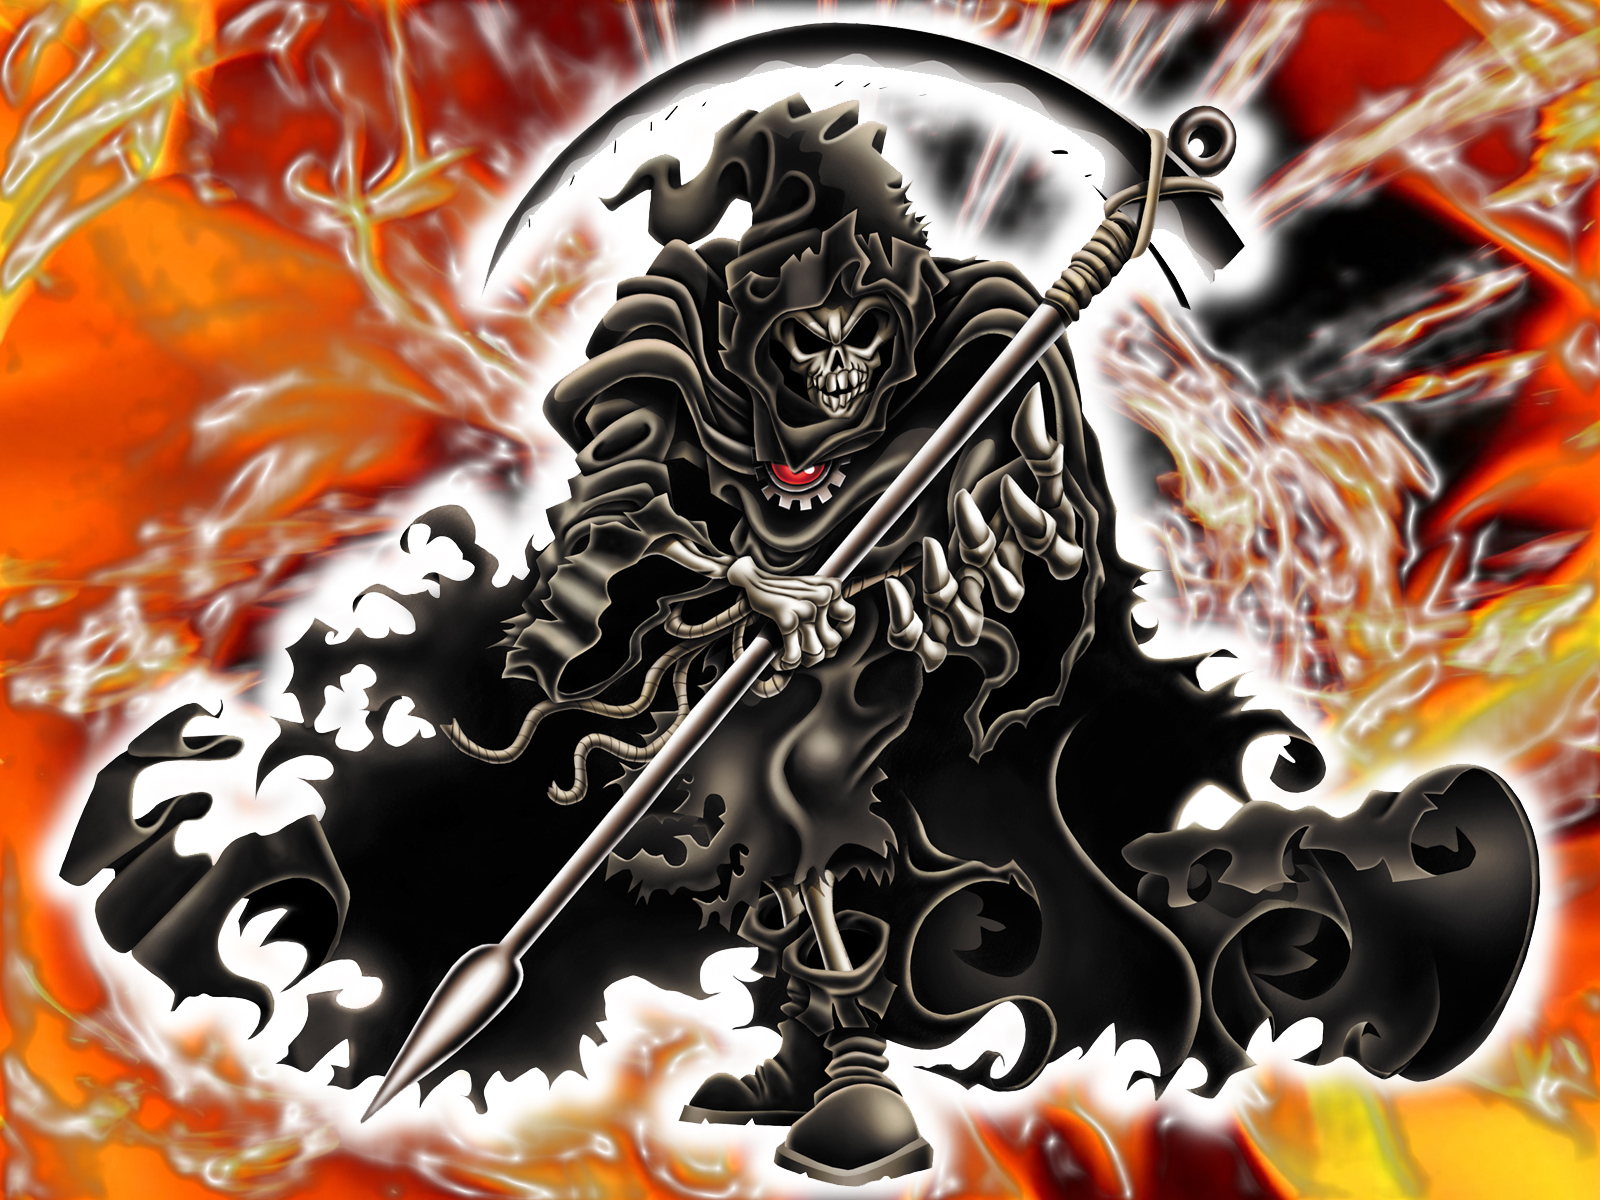 reaper skull in flames wallpaper